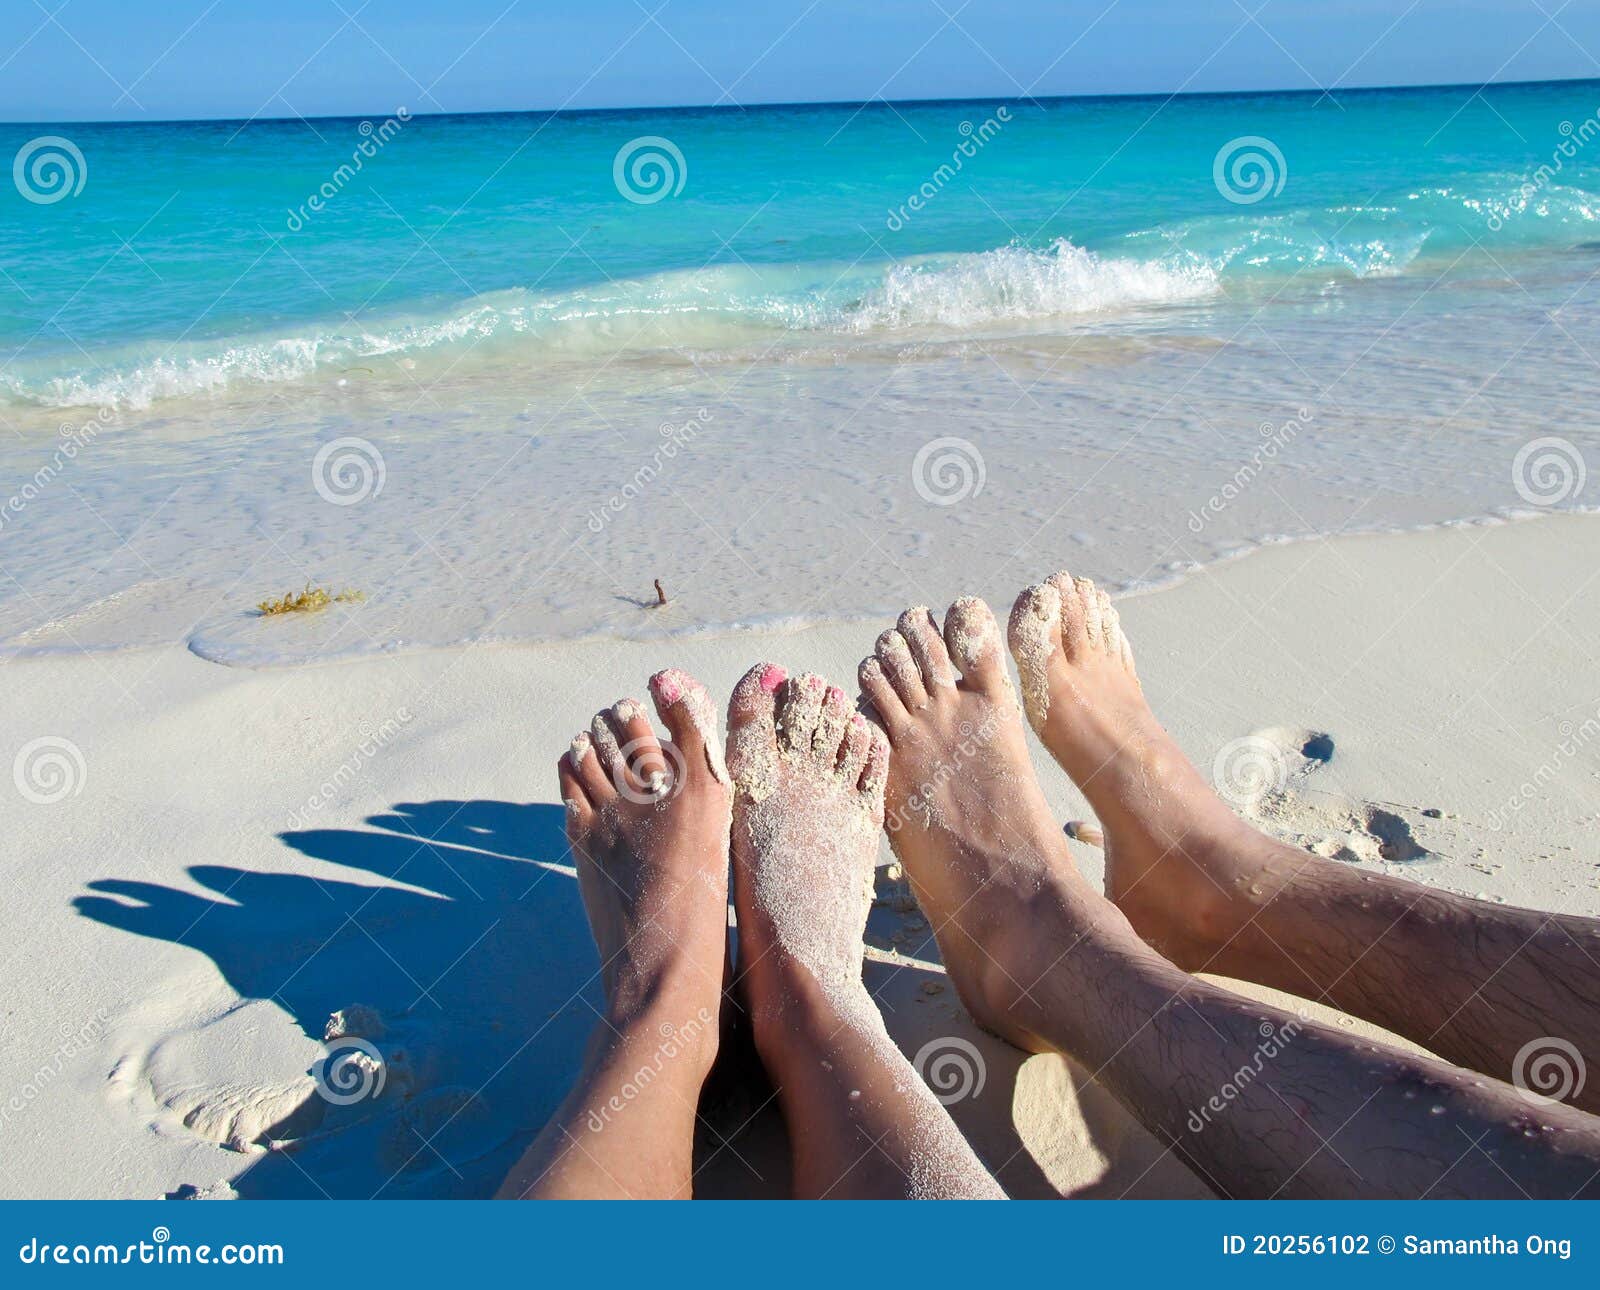 feet in the sand at playa blanca, cayo largo, cuba